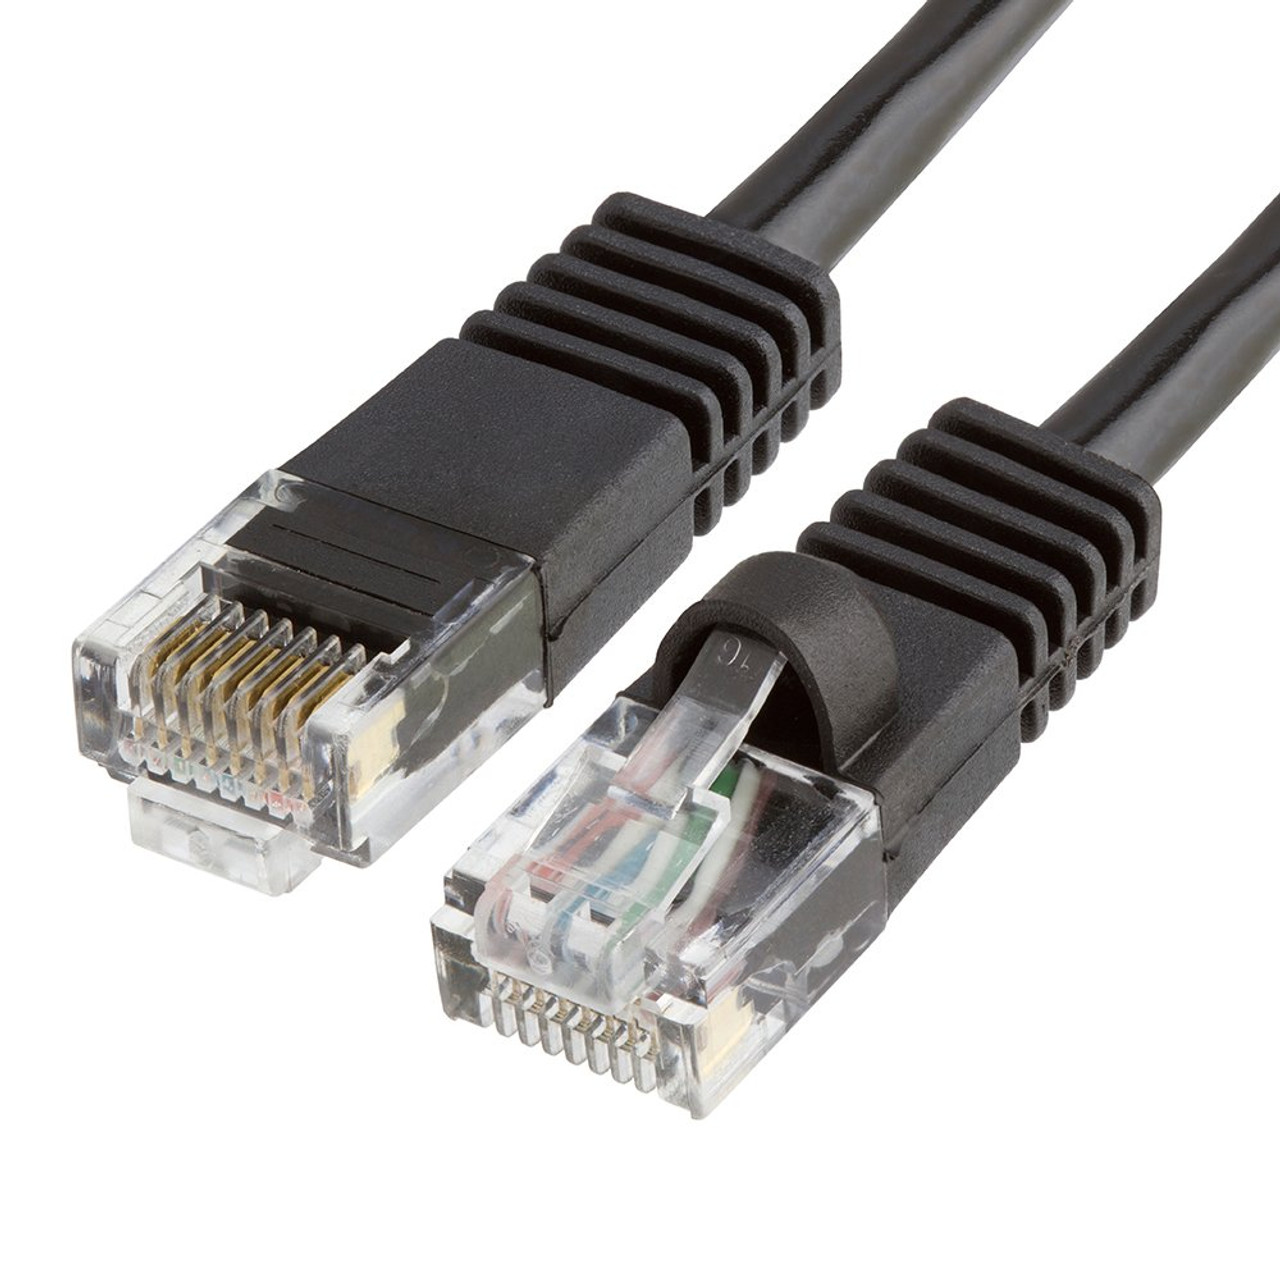 Cat5e 350MHz UTP Ethernet Bare Copper Network Cable - Black